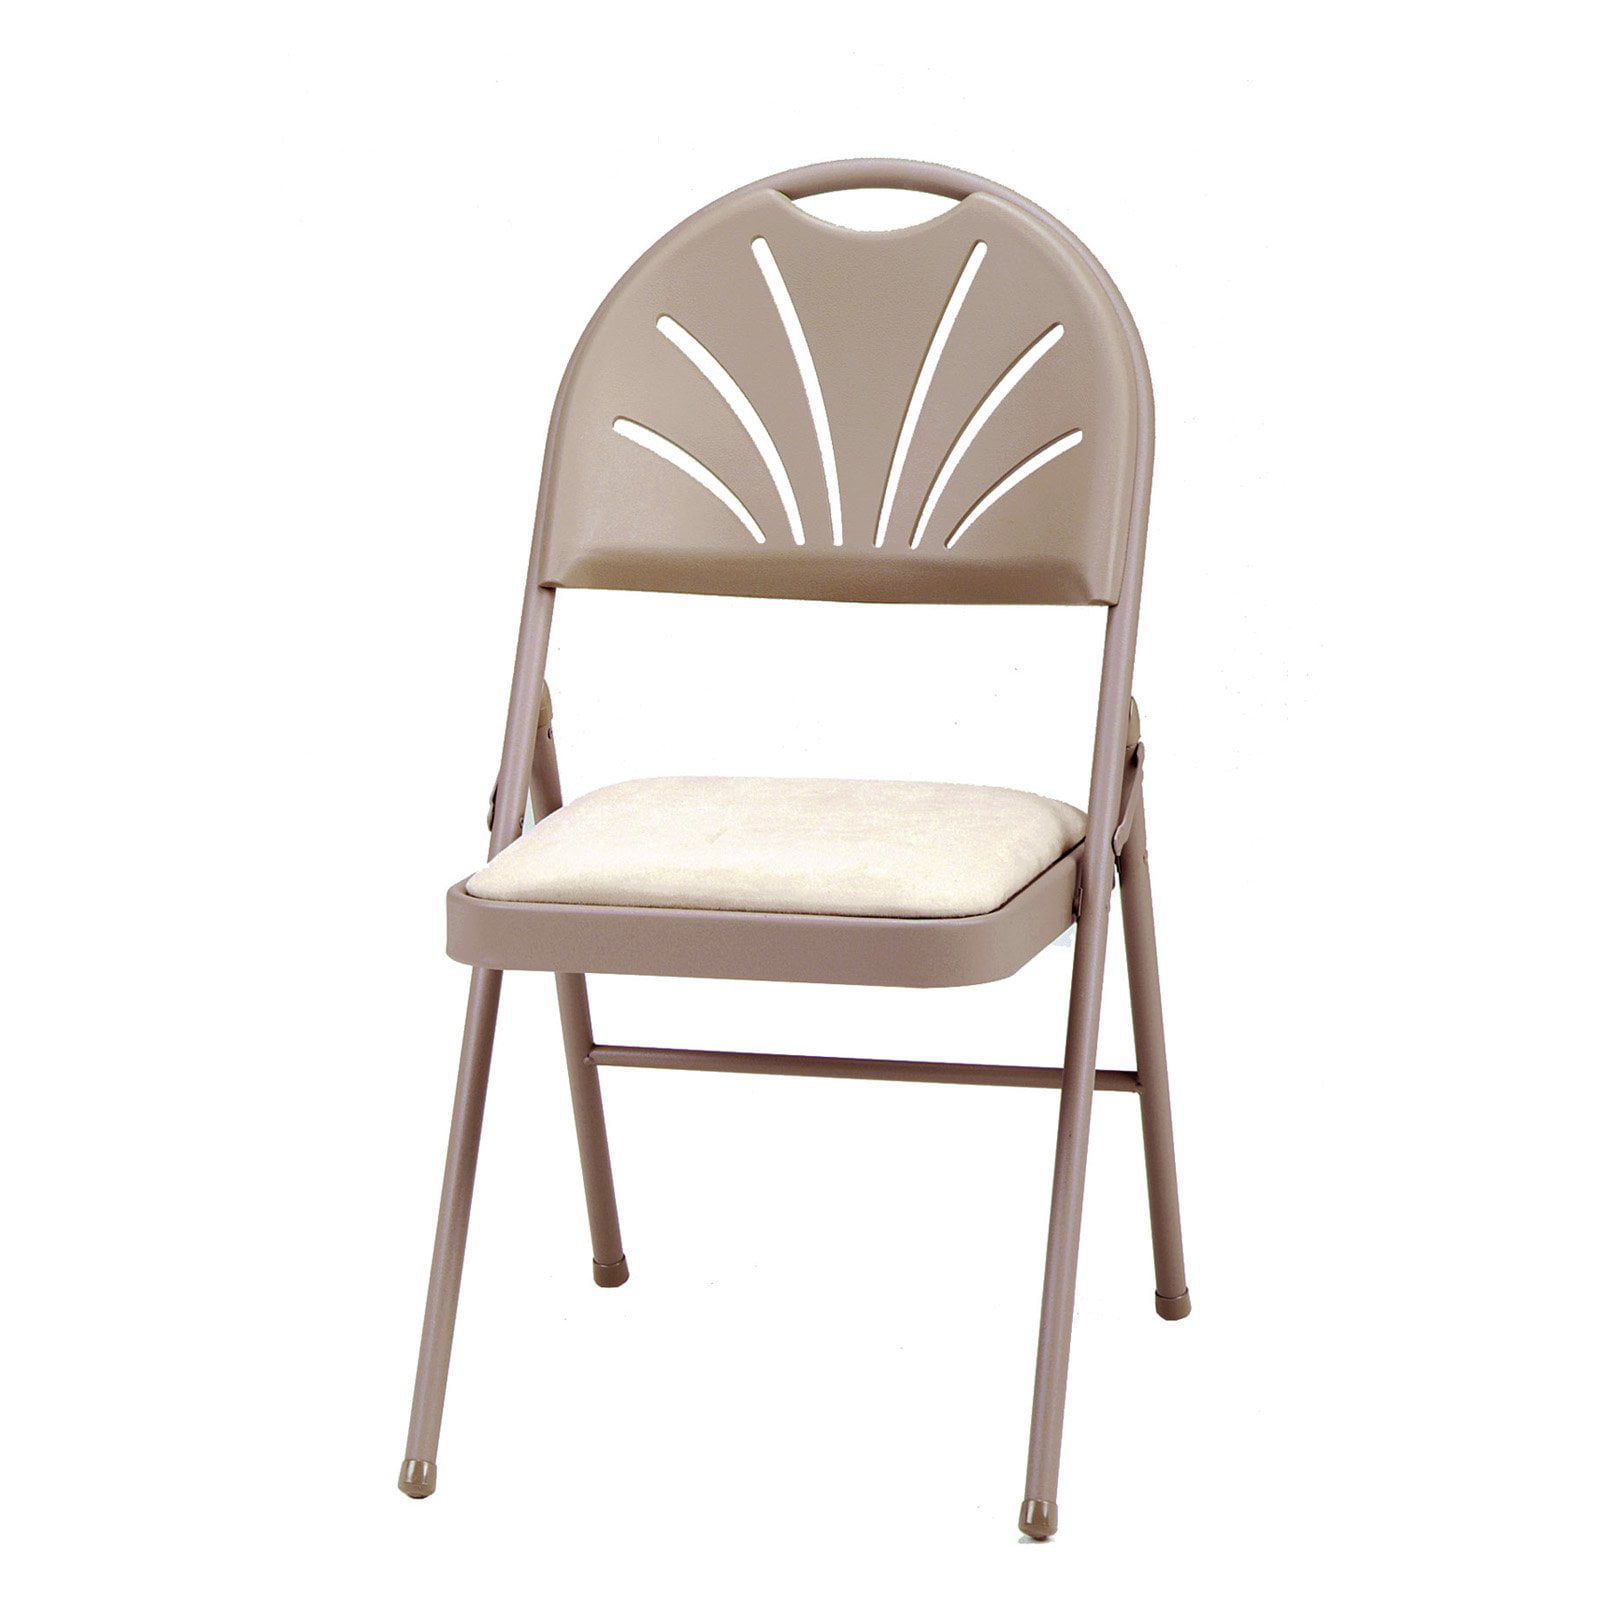 Sudden Comfort Lace High Back Folding Chair - Set of 4 - Walmart.com